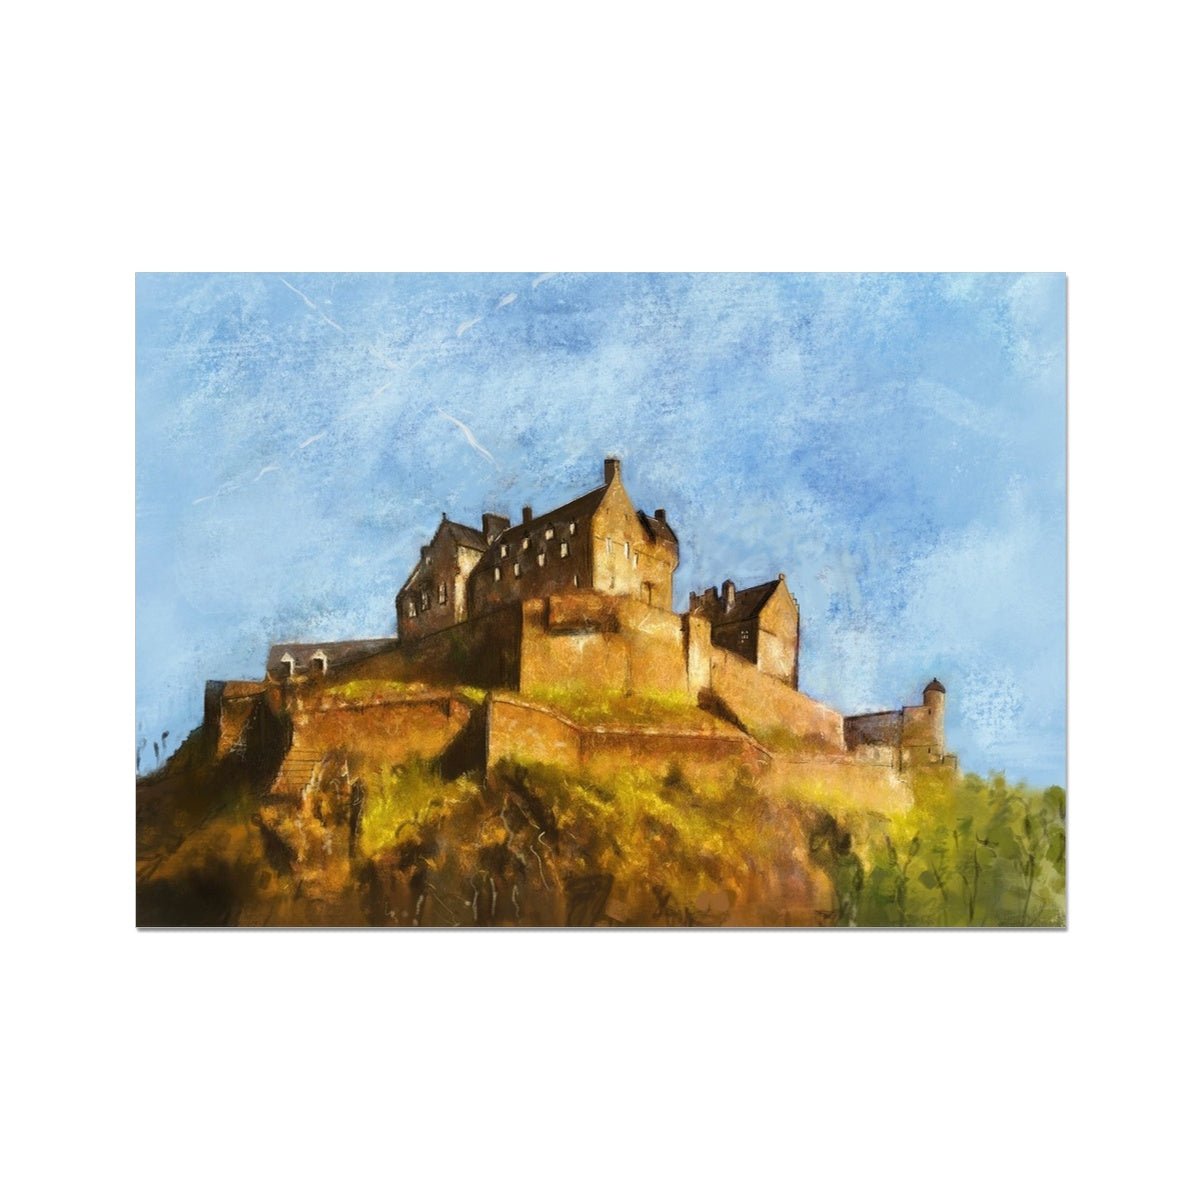 Edinburgh Castle Painting | Fine Art Prints From Scotland-Unframed Prints-Edinburgh & Glasgow Art Gallery-A2 Landscape-Paintings, Prints, Homeware, Art Gifts From Scotland By Scottish Artist Kevin Hunter